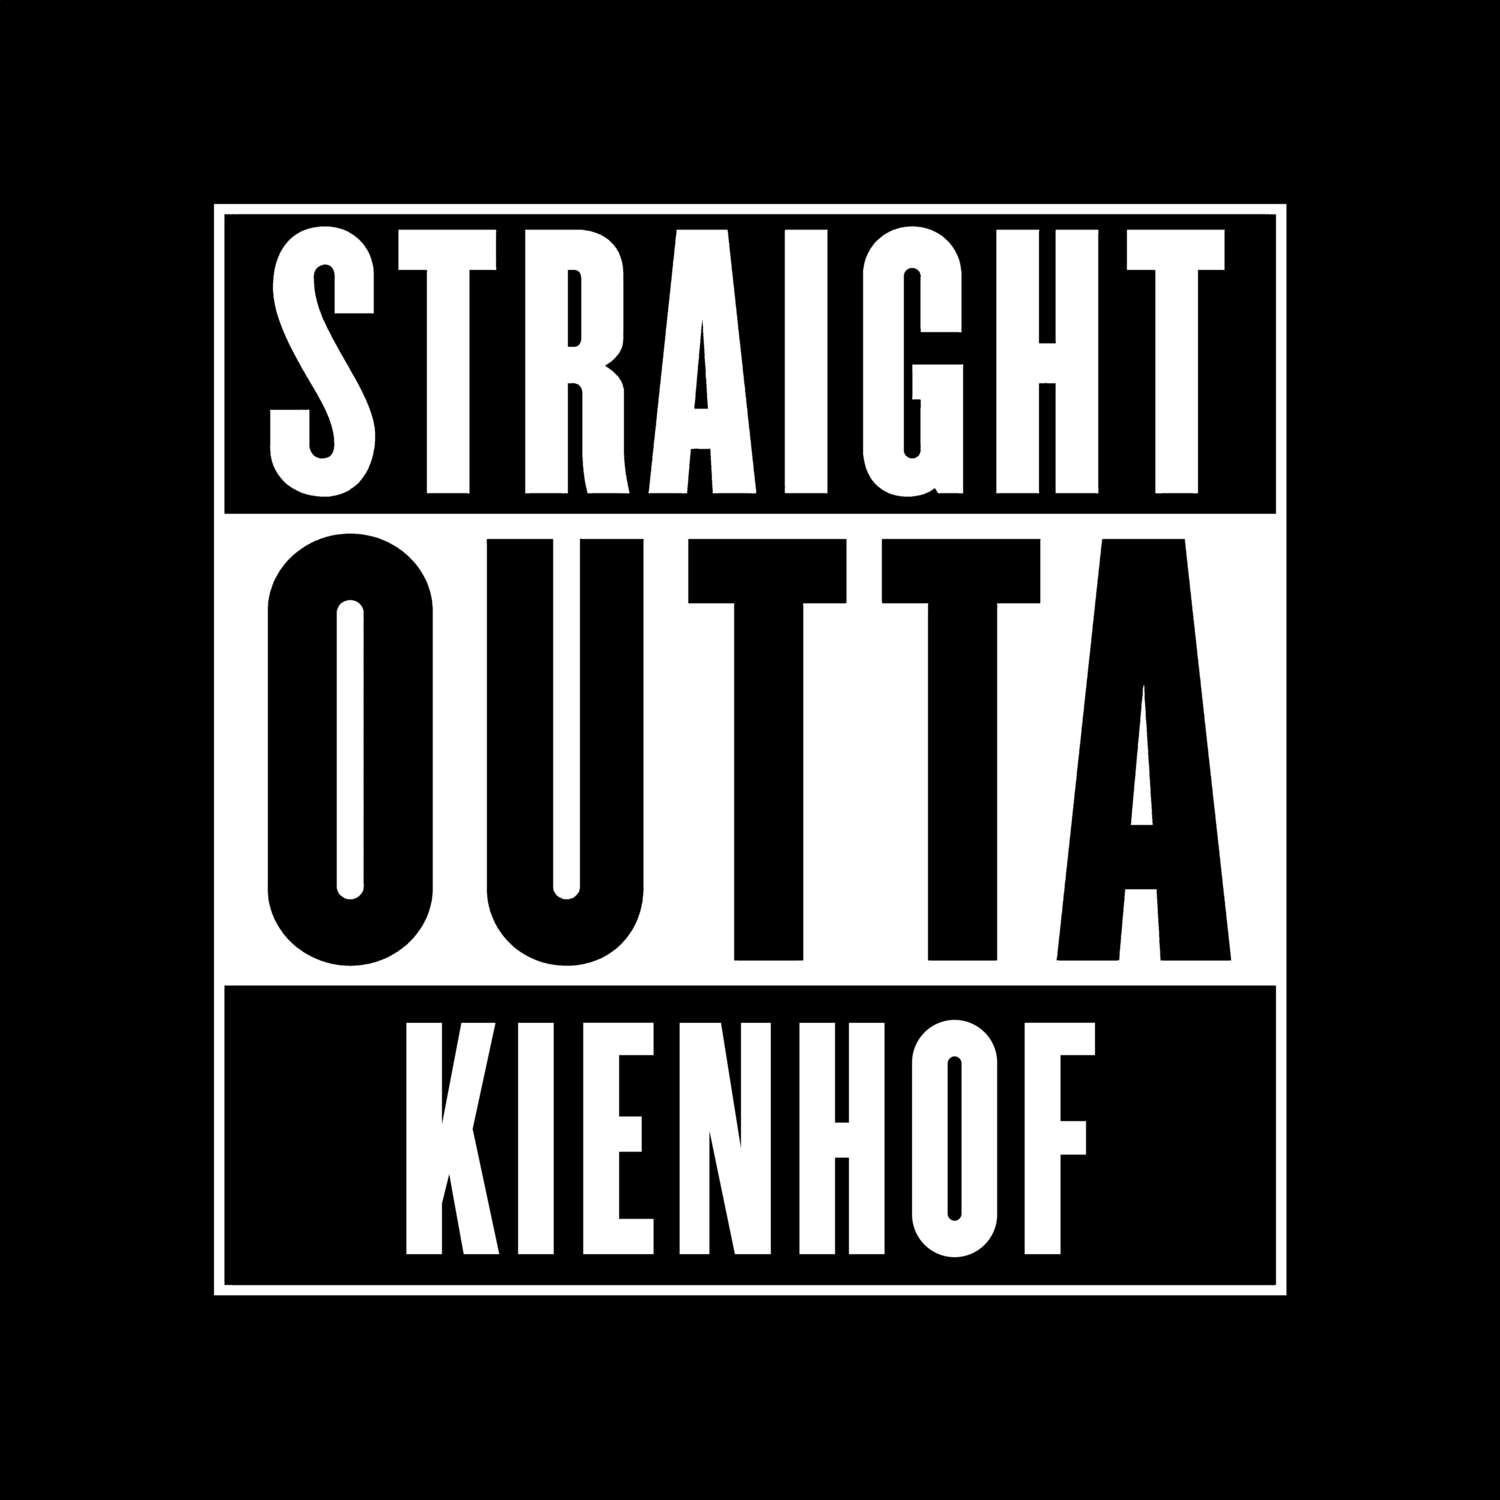 Kienhof T-Shirt »Straight Outta«